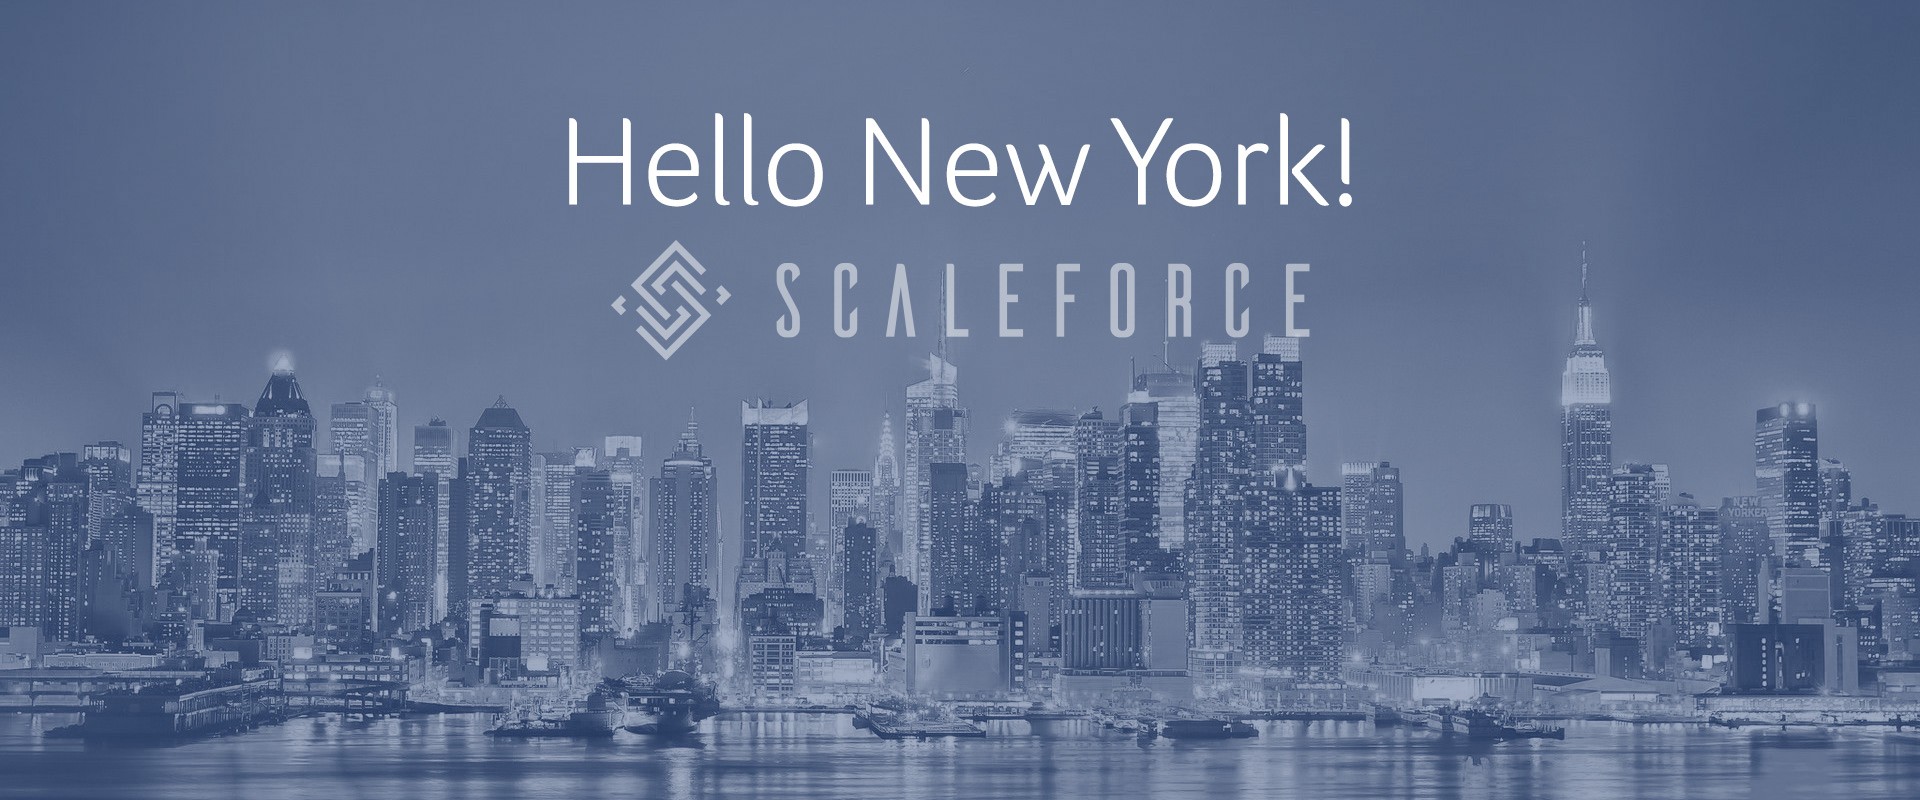 Scaleforce's New York region is now online!